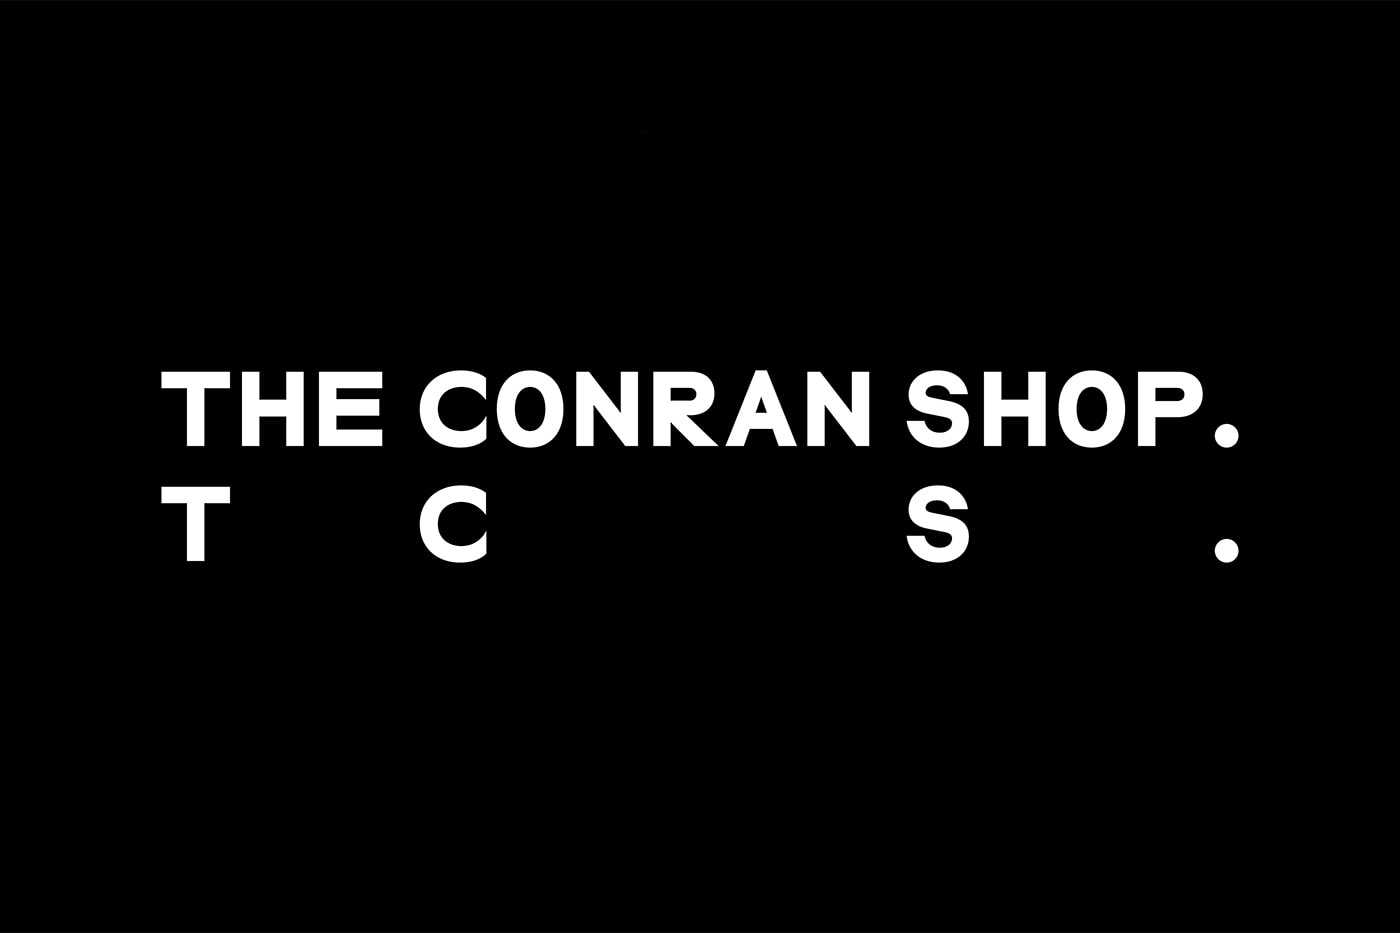 The Conran Shop Reveals New Brand Identity Designed by Pentagram